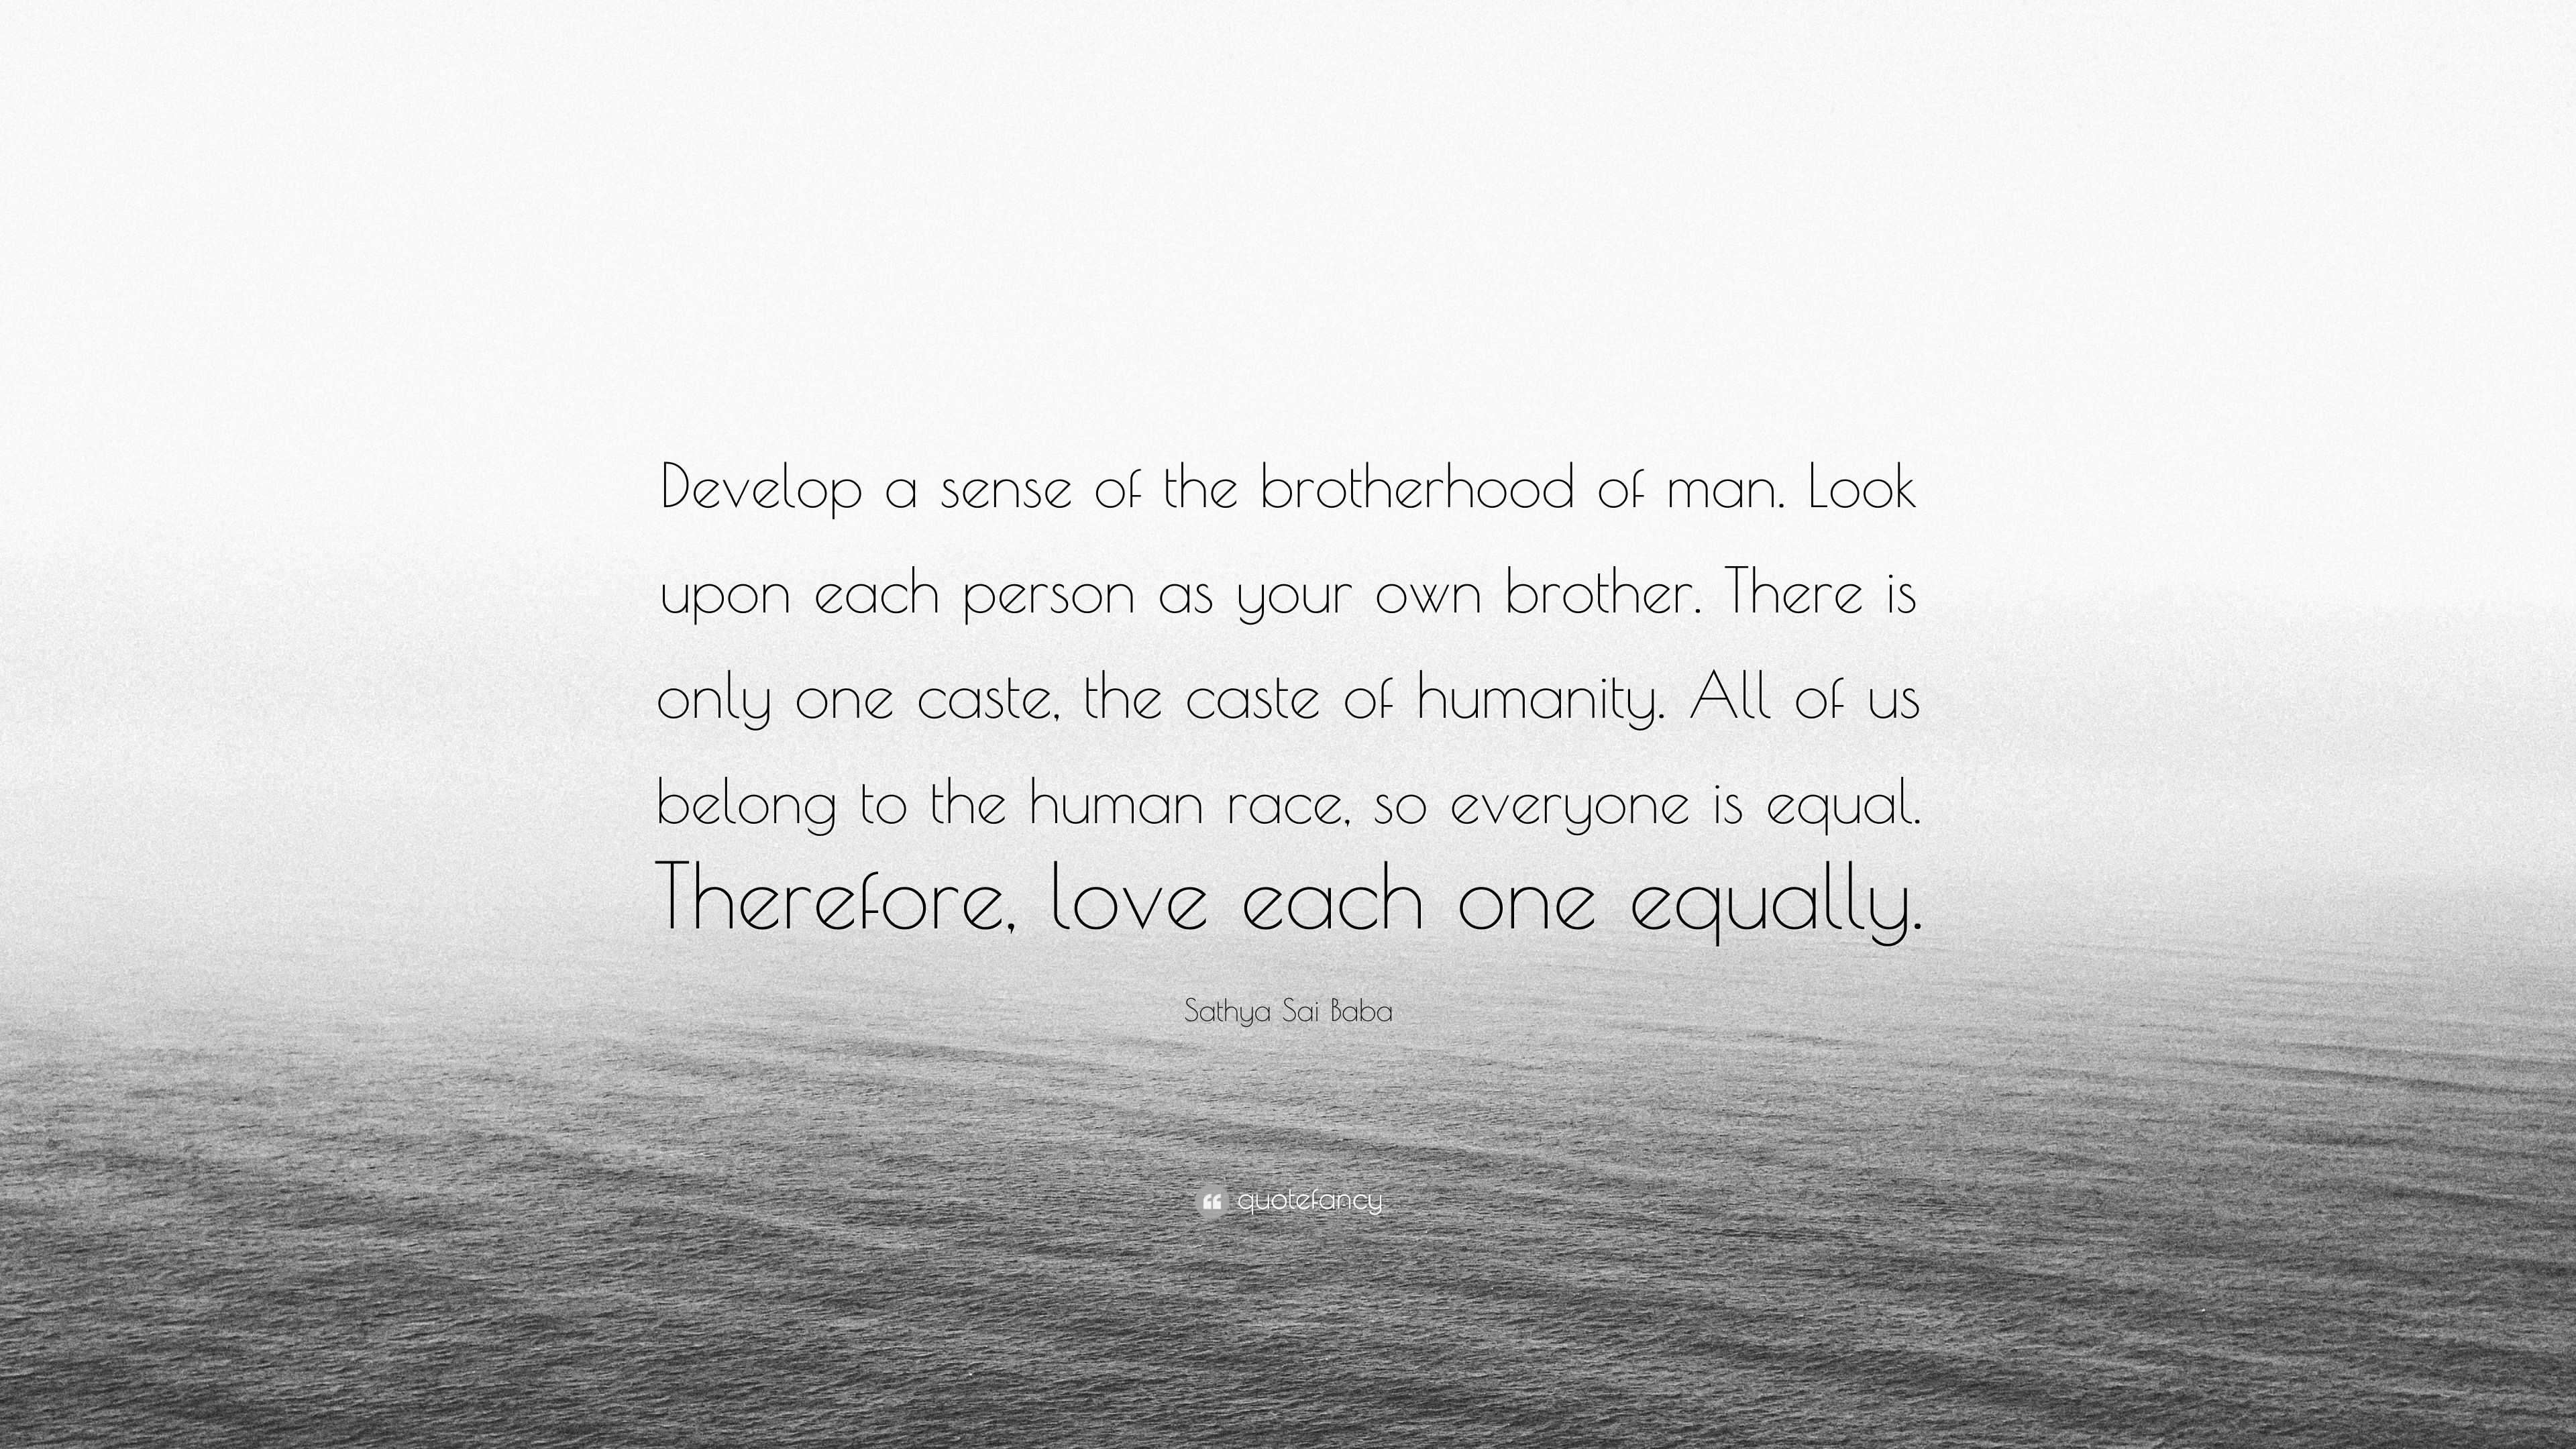 Sathya Sai Baba Quote: “Develop a sense of the brotherhood of man. Look ...